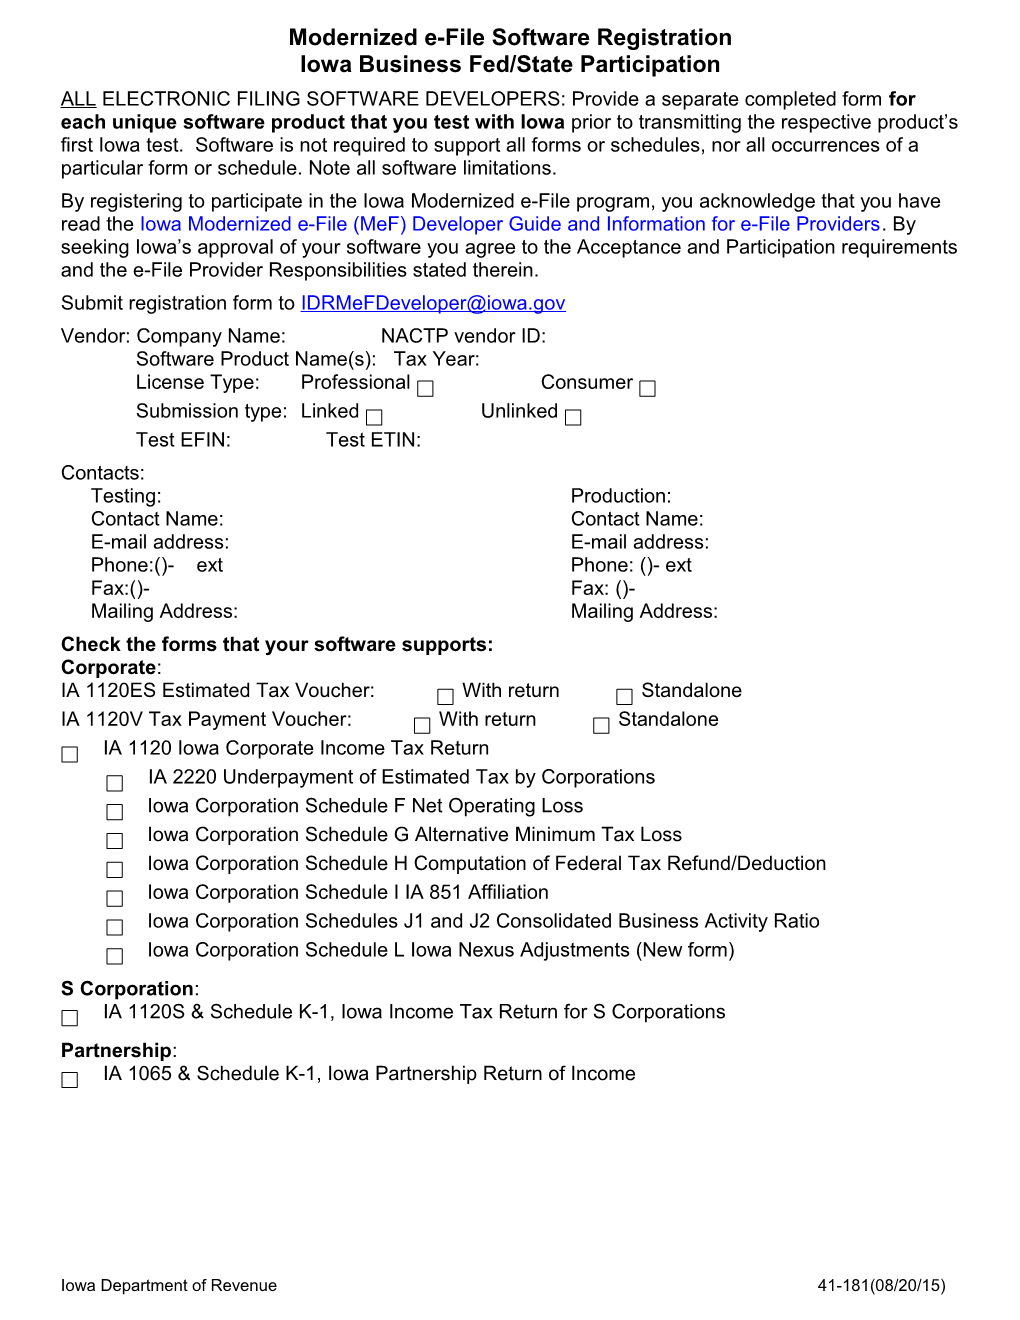 Iowa Software Developer Intent Response Form - Tax Year 2007